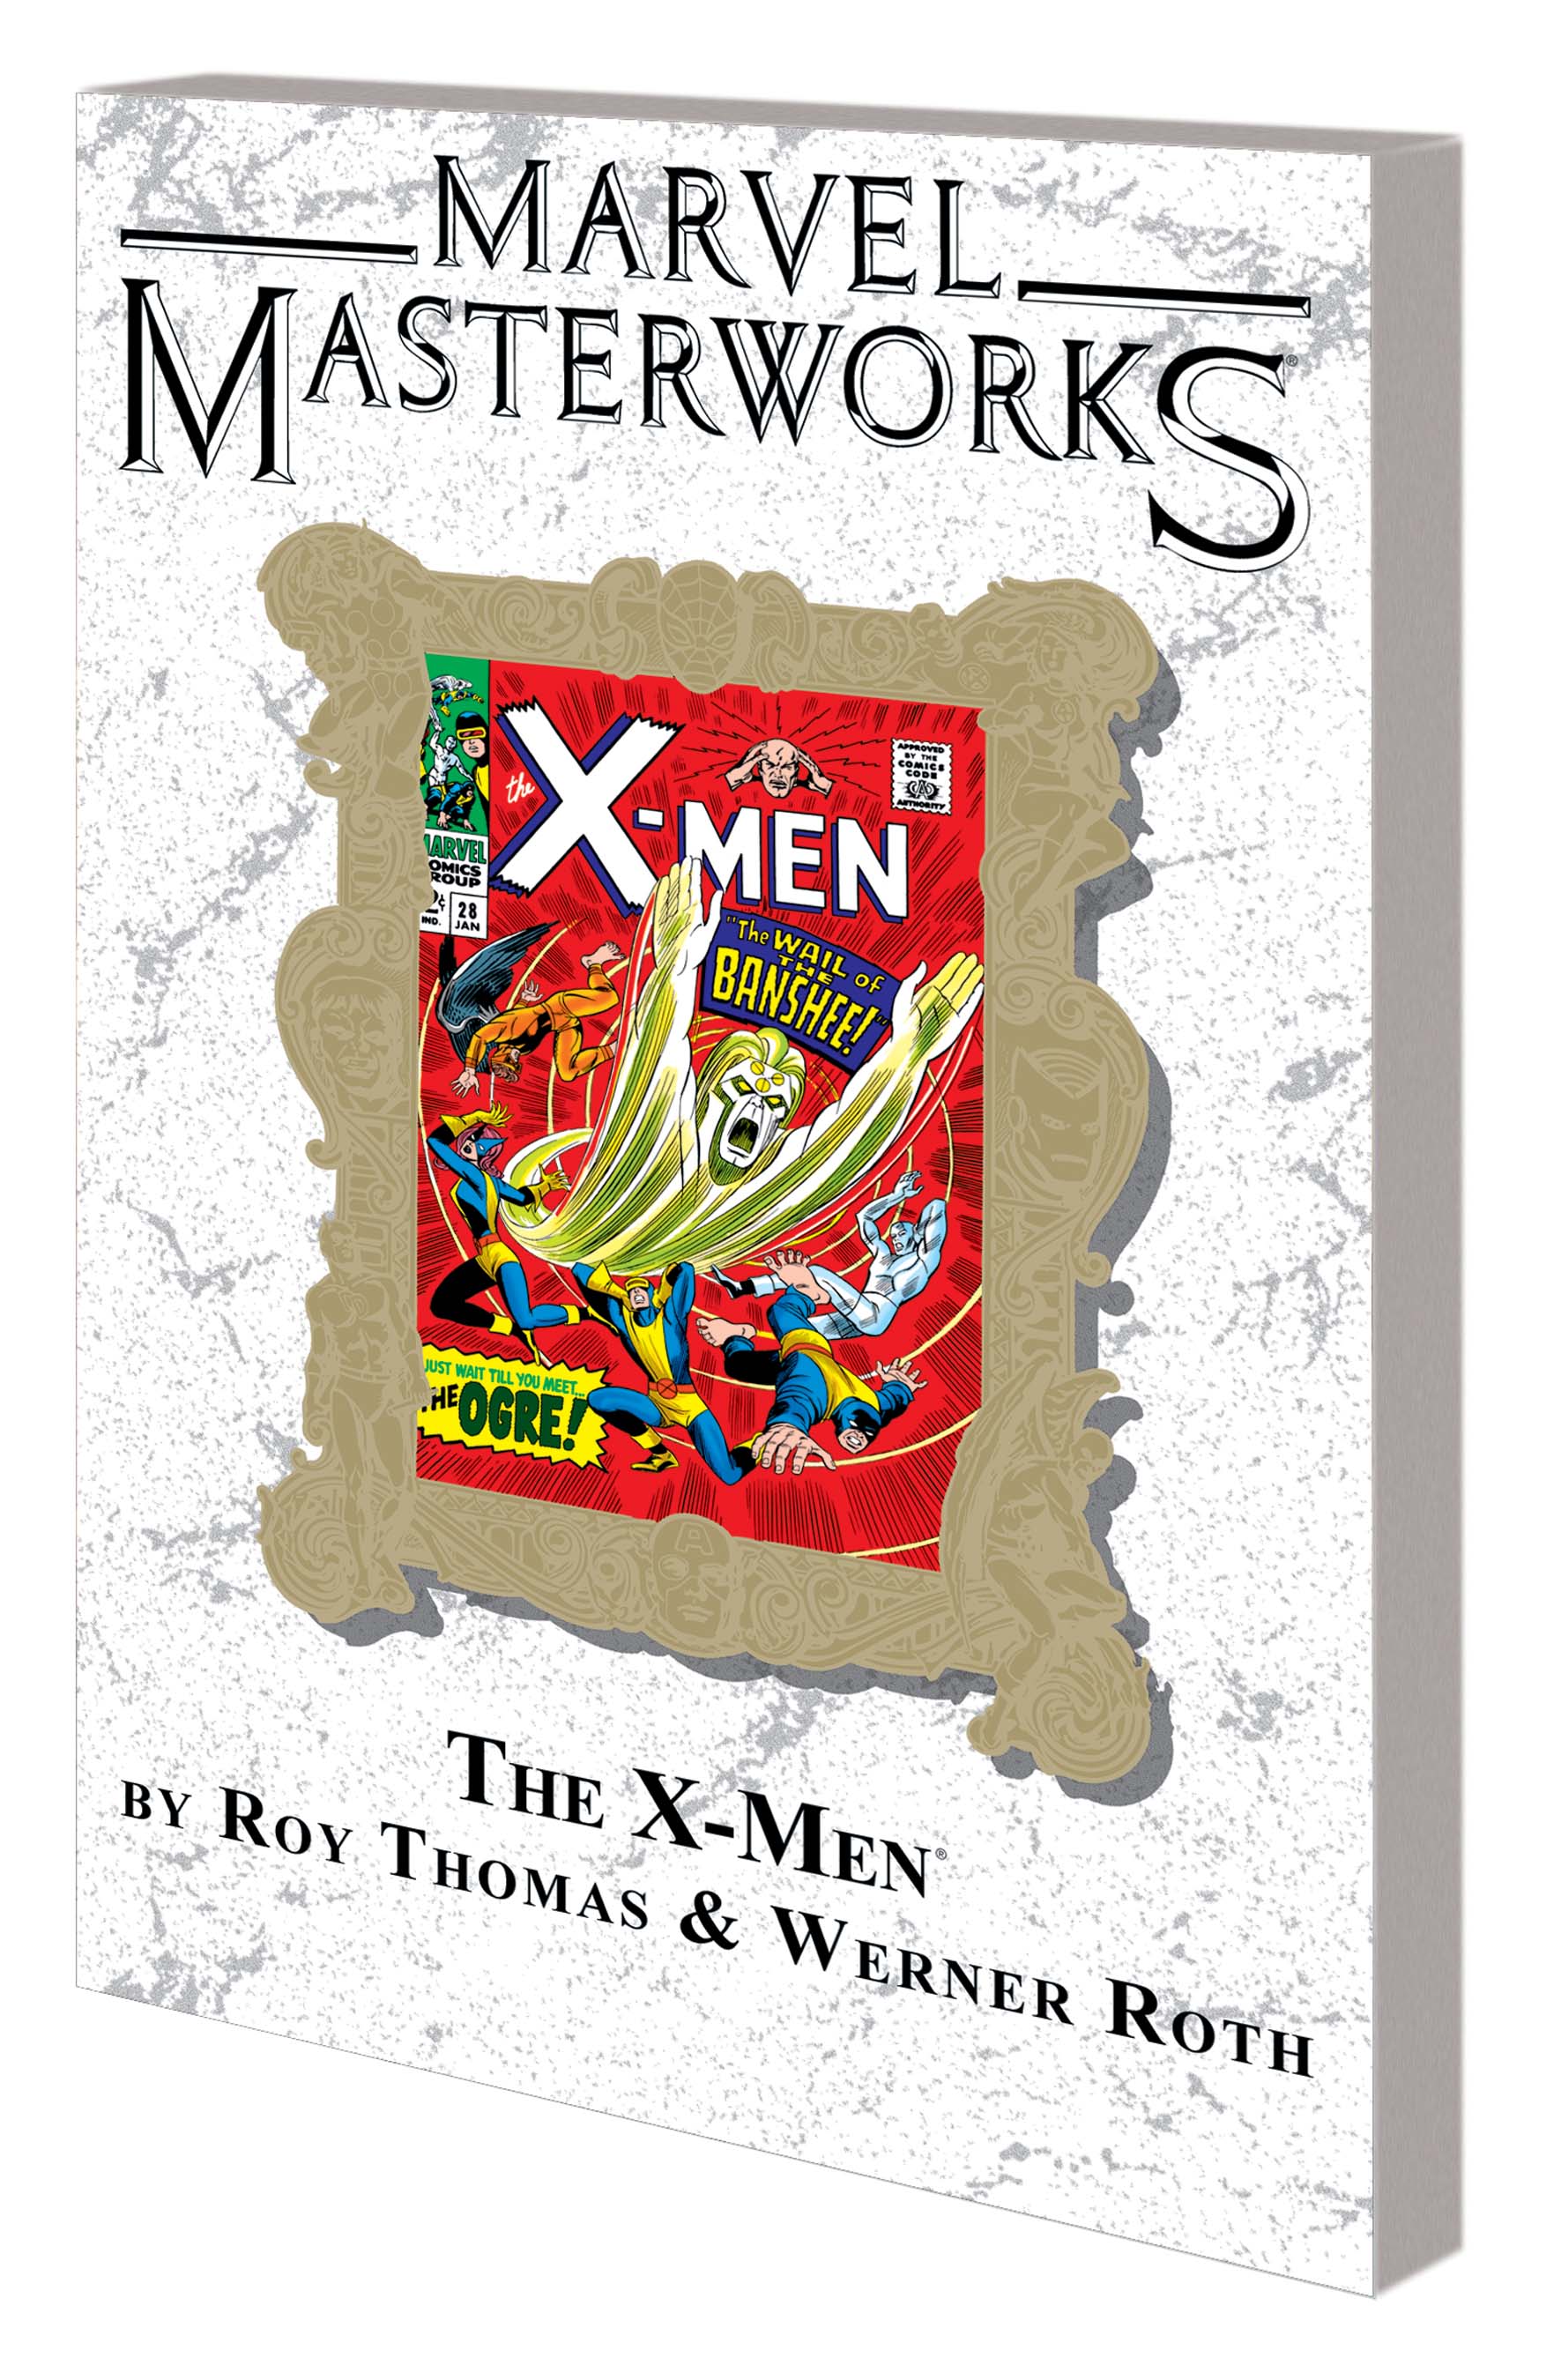 Marvel Masterworks: The X-Men Vol. 3 DM Variant TPB (Trade Paperback)